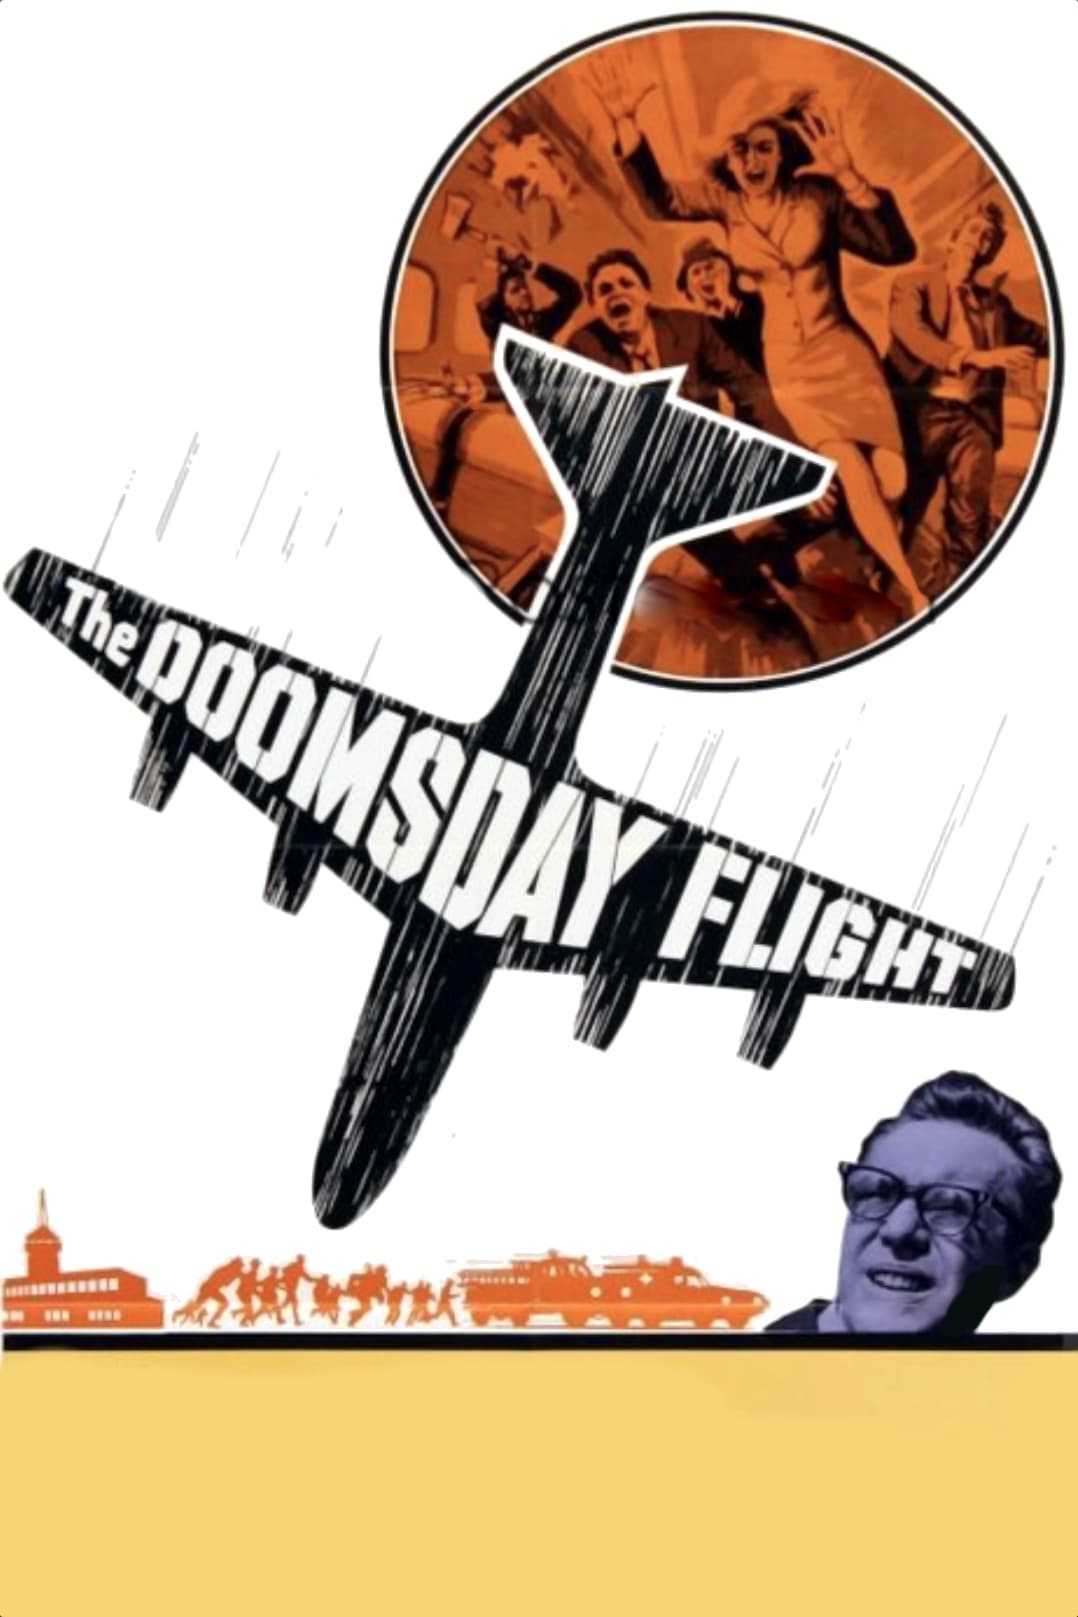 The Doomsday Flight (1966)